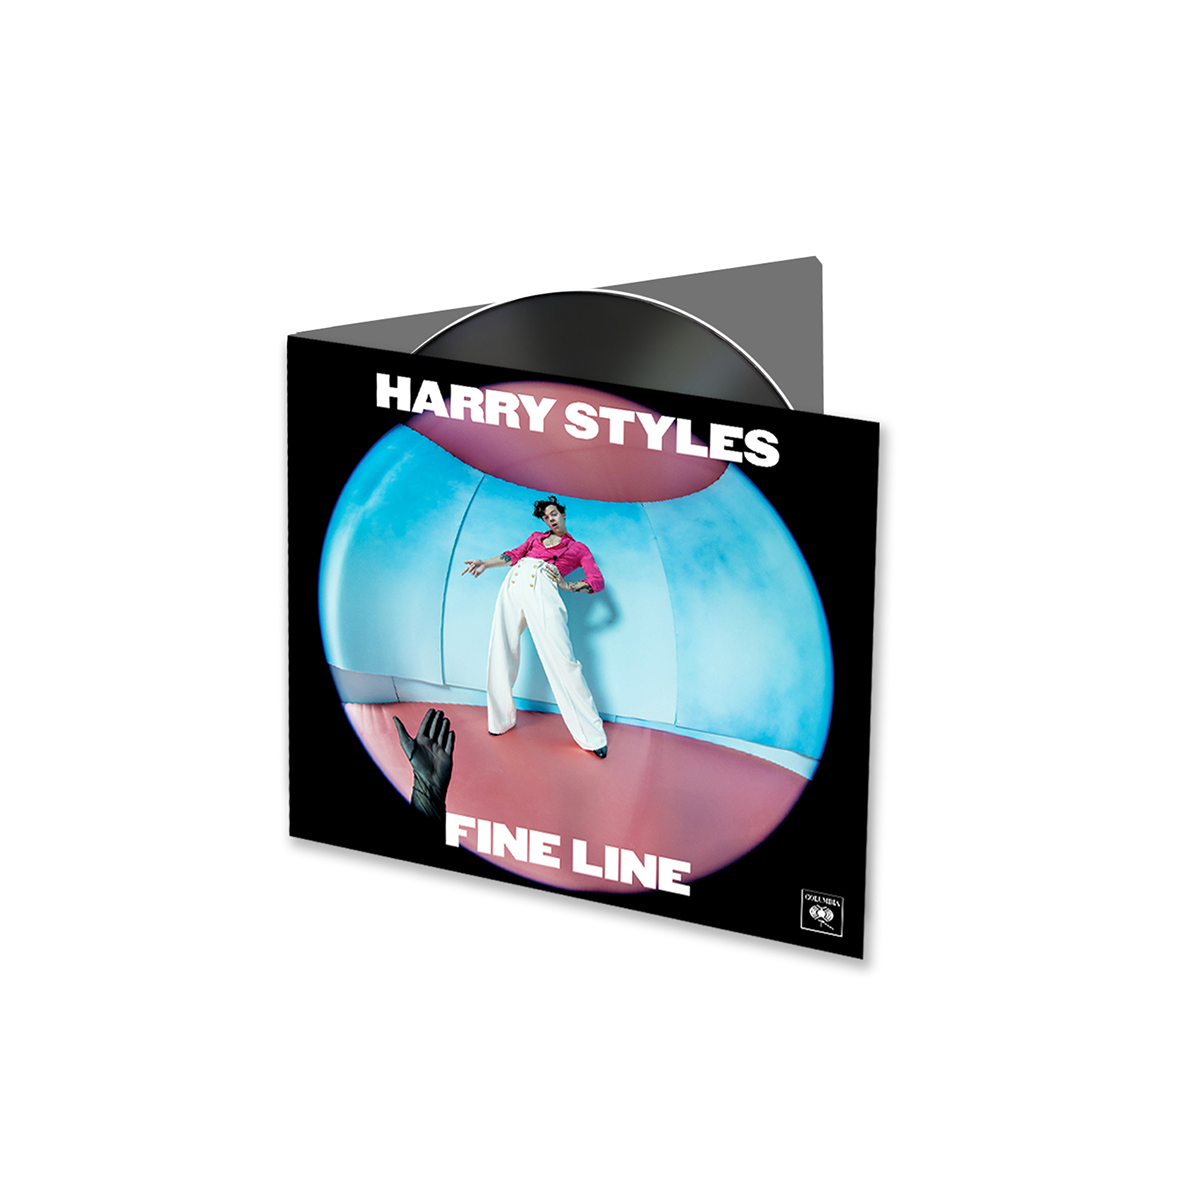 Fine Line CD - Harry Styles Australia